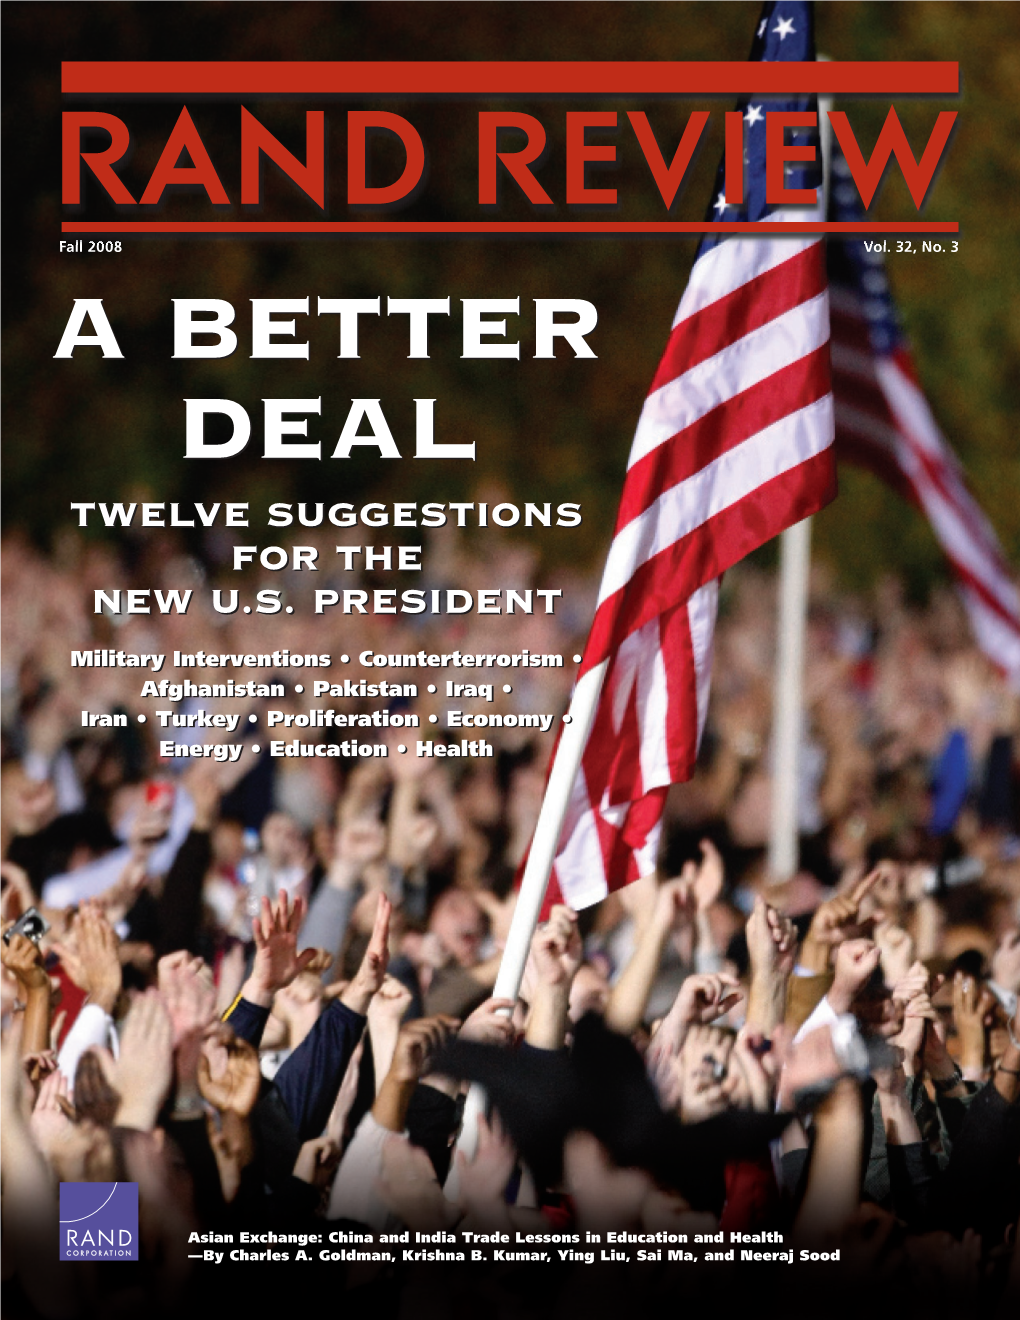 RAND Review, Vol. 32, No. 3, Fall 2008